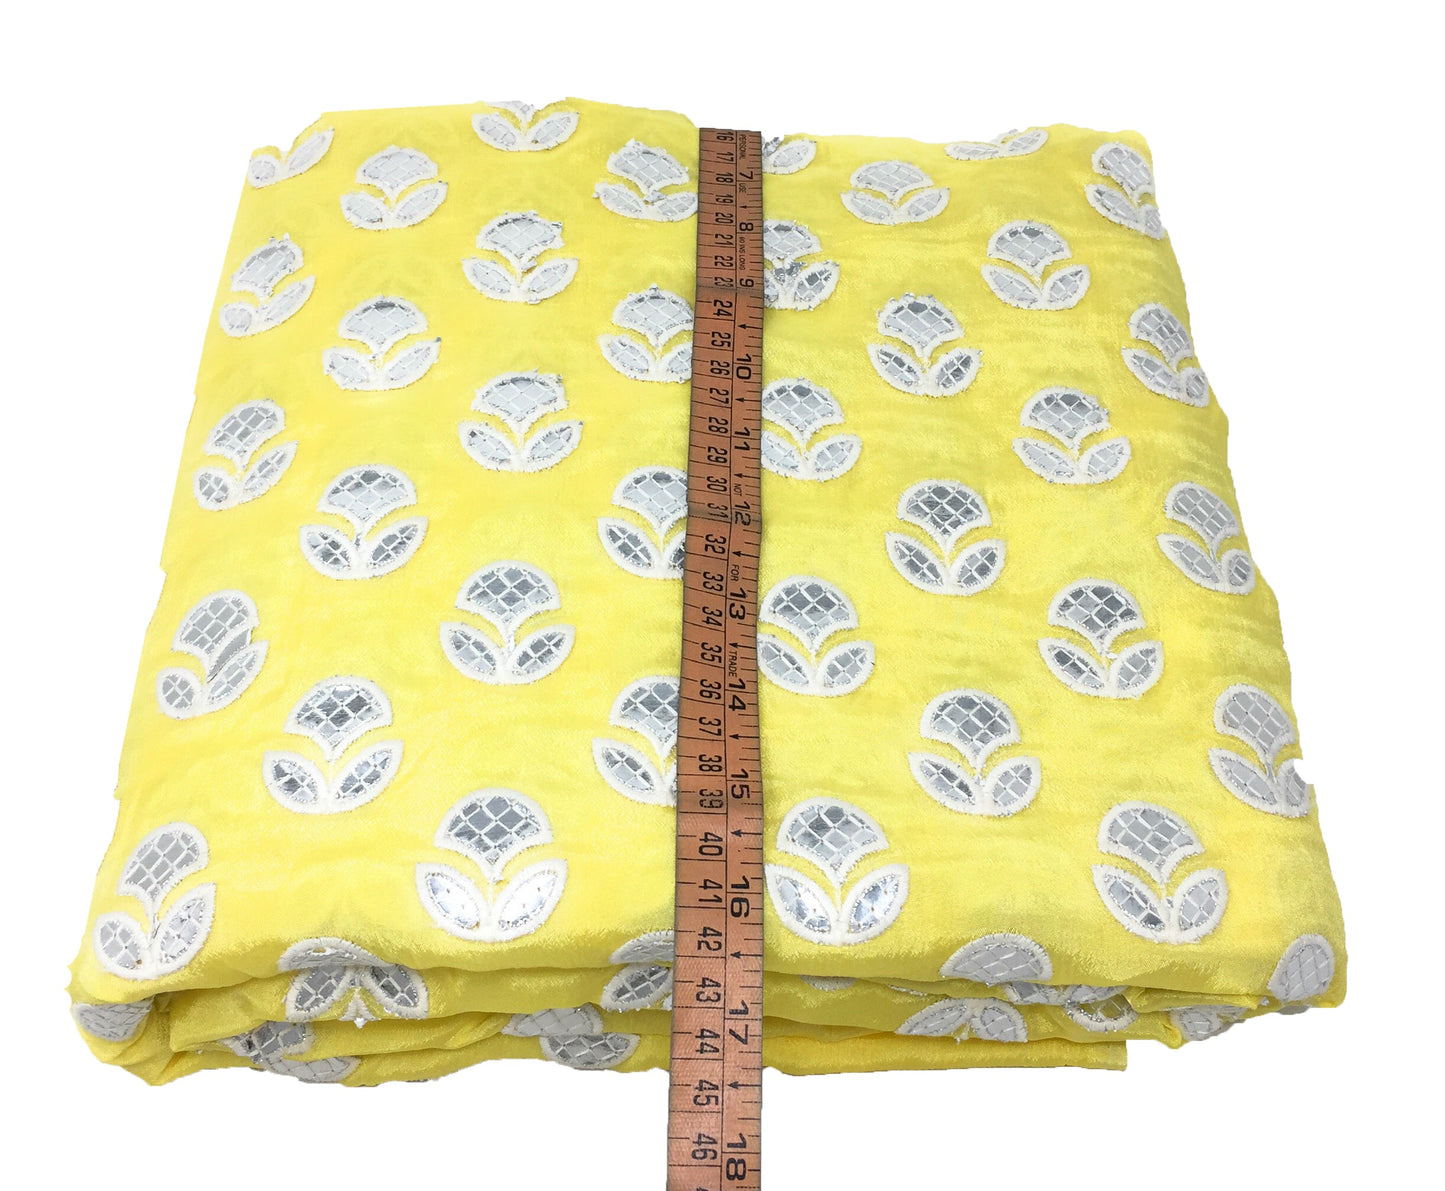 Yellow Chiffon Cloth with Gota work embroidery